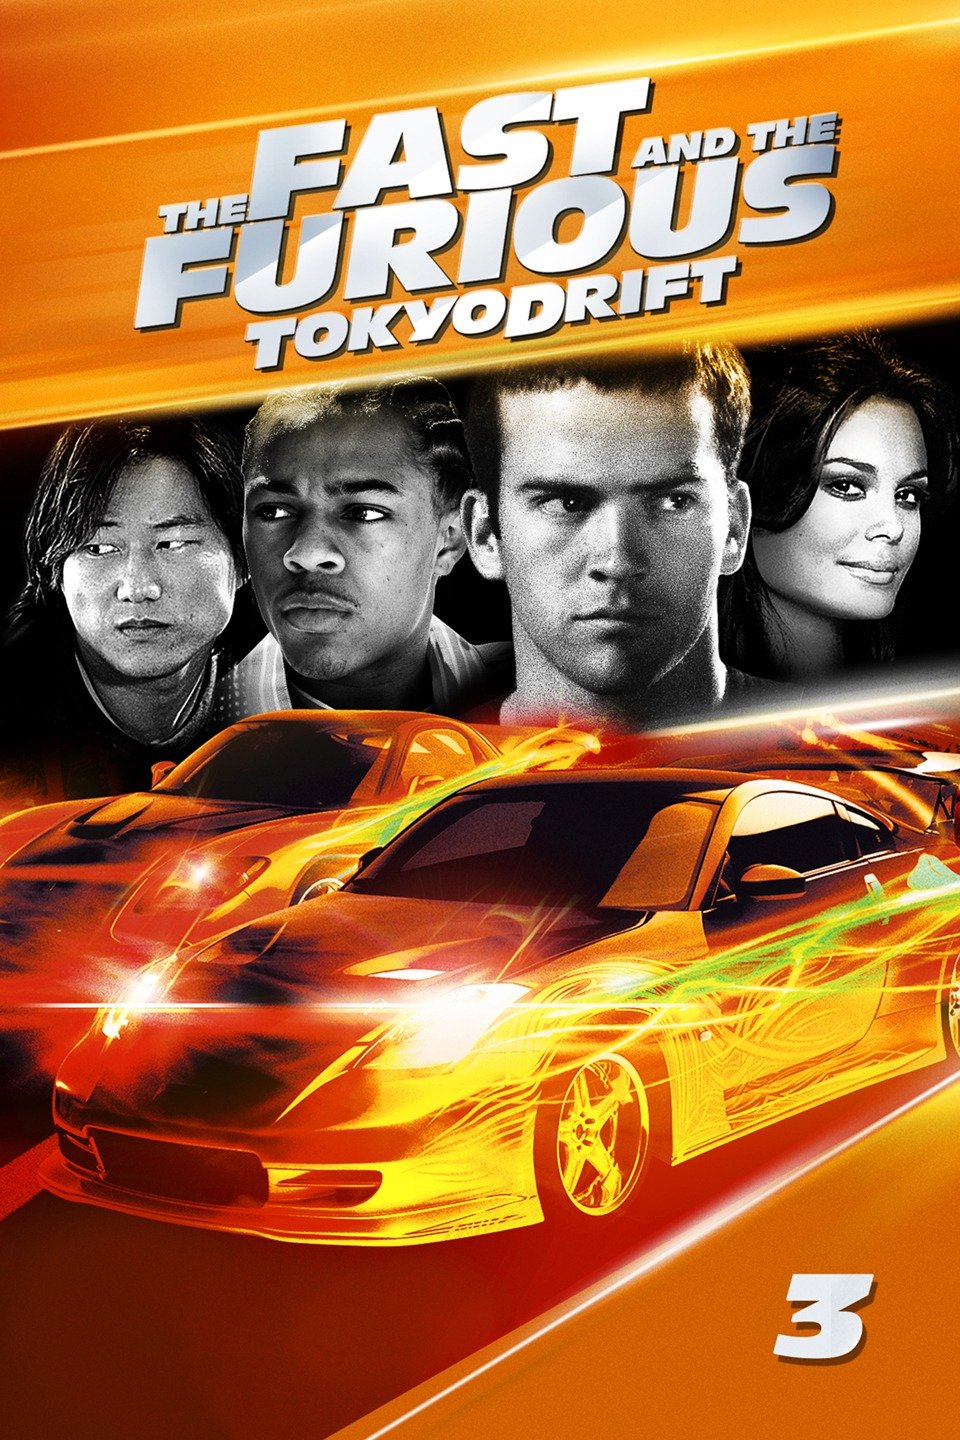 [Mini-HD] The Fast and the Furious: Tokyo Drift (2006) เร็ว..แรงทะลุนรก ซิ่งแหกพิกัดโตเกียว ภาค 3 [1080P] [BluRay.DTS.x264] [พากย์ไทย DTS + อังกฤษ DTS] [บรรยายไทย + อังกฤษ] [เสียงไทย + ซับไทย]